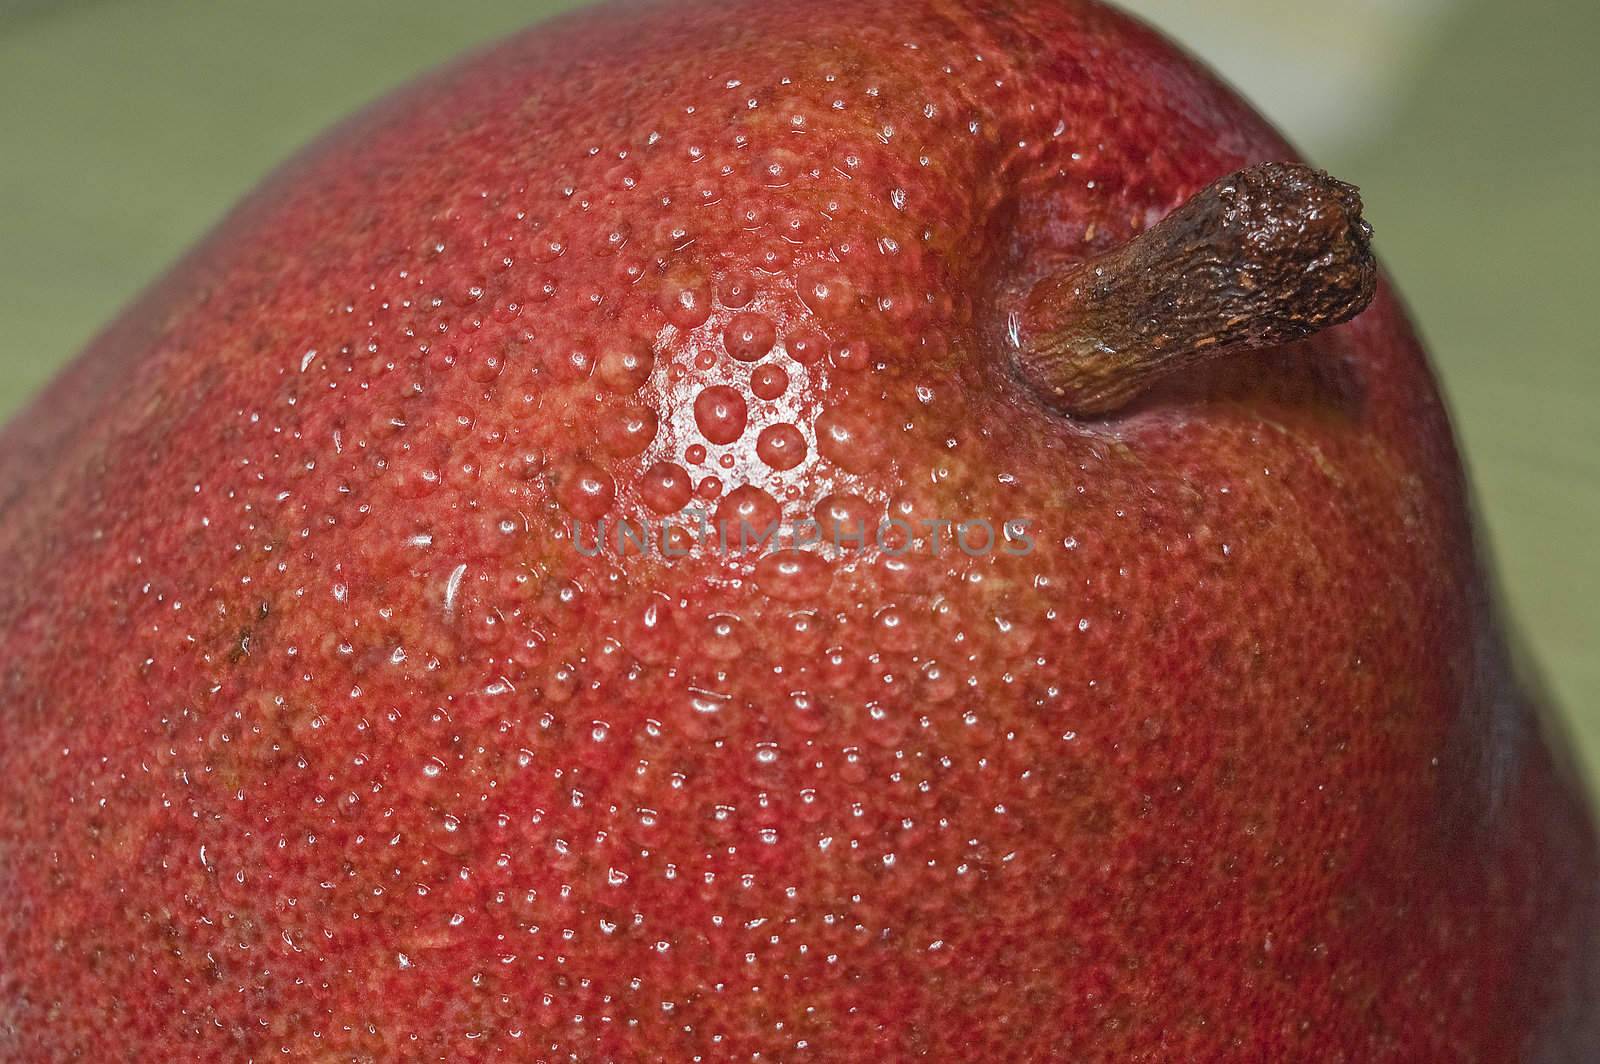 macro close up shot of a red pear